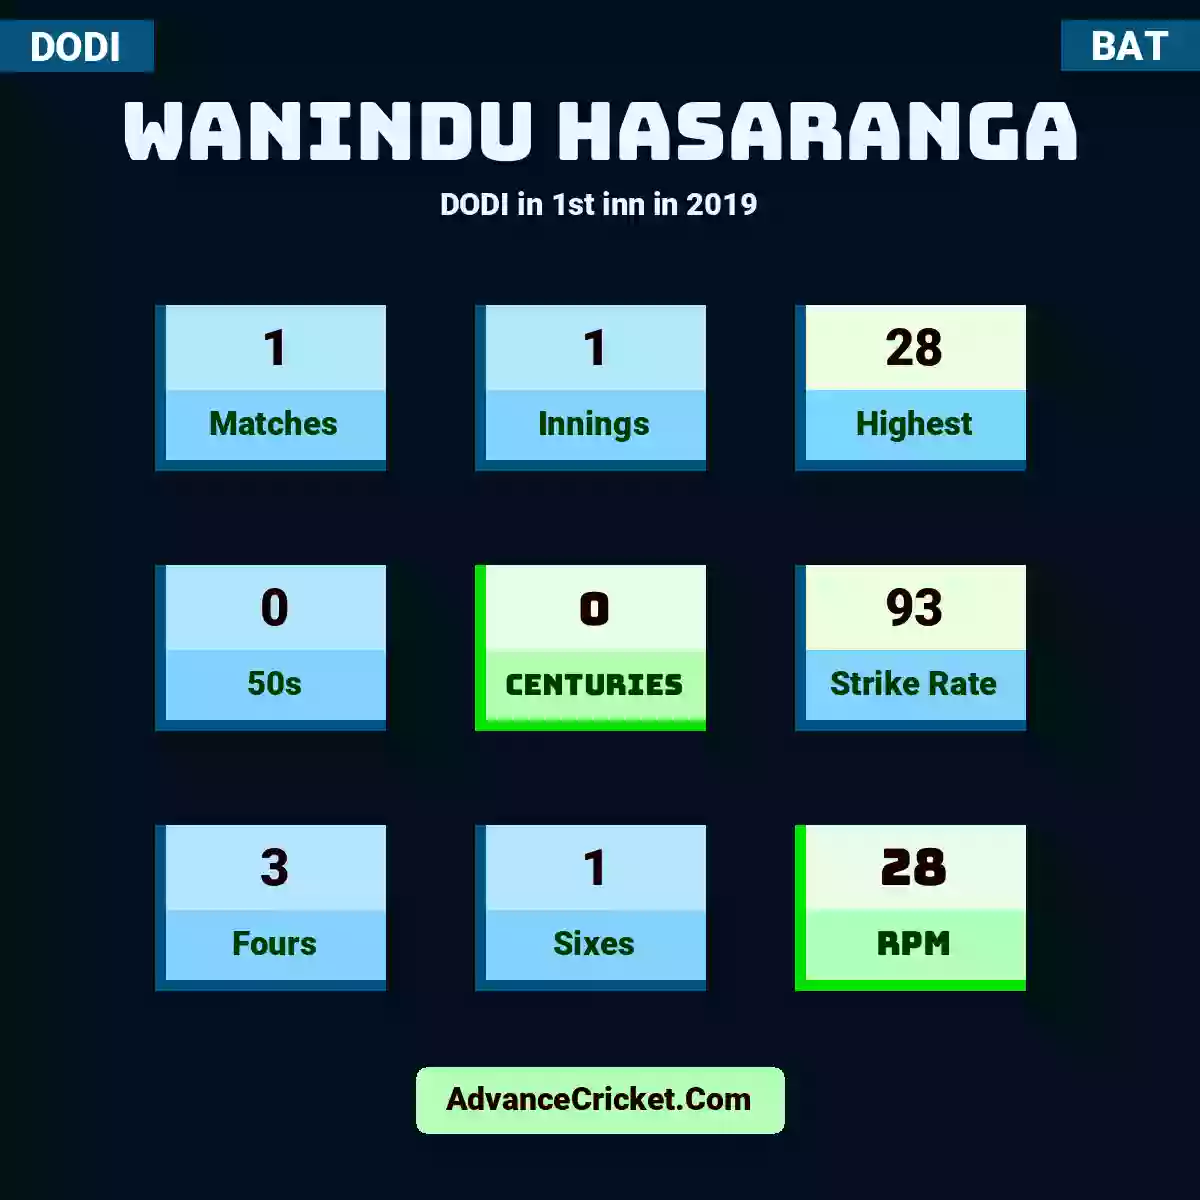 Wanindu Hasaranga DODI  in 1st inn in 2019, Wanindu Hasaranga played 1 matches, scored 28 runs as highest, 0 half-centuries, and 0 centuries, with a strike rate of 93. W.Hasaranga hit 3 fours and 1 sixes, with an RPM of 28.